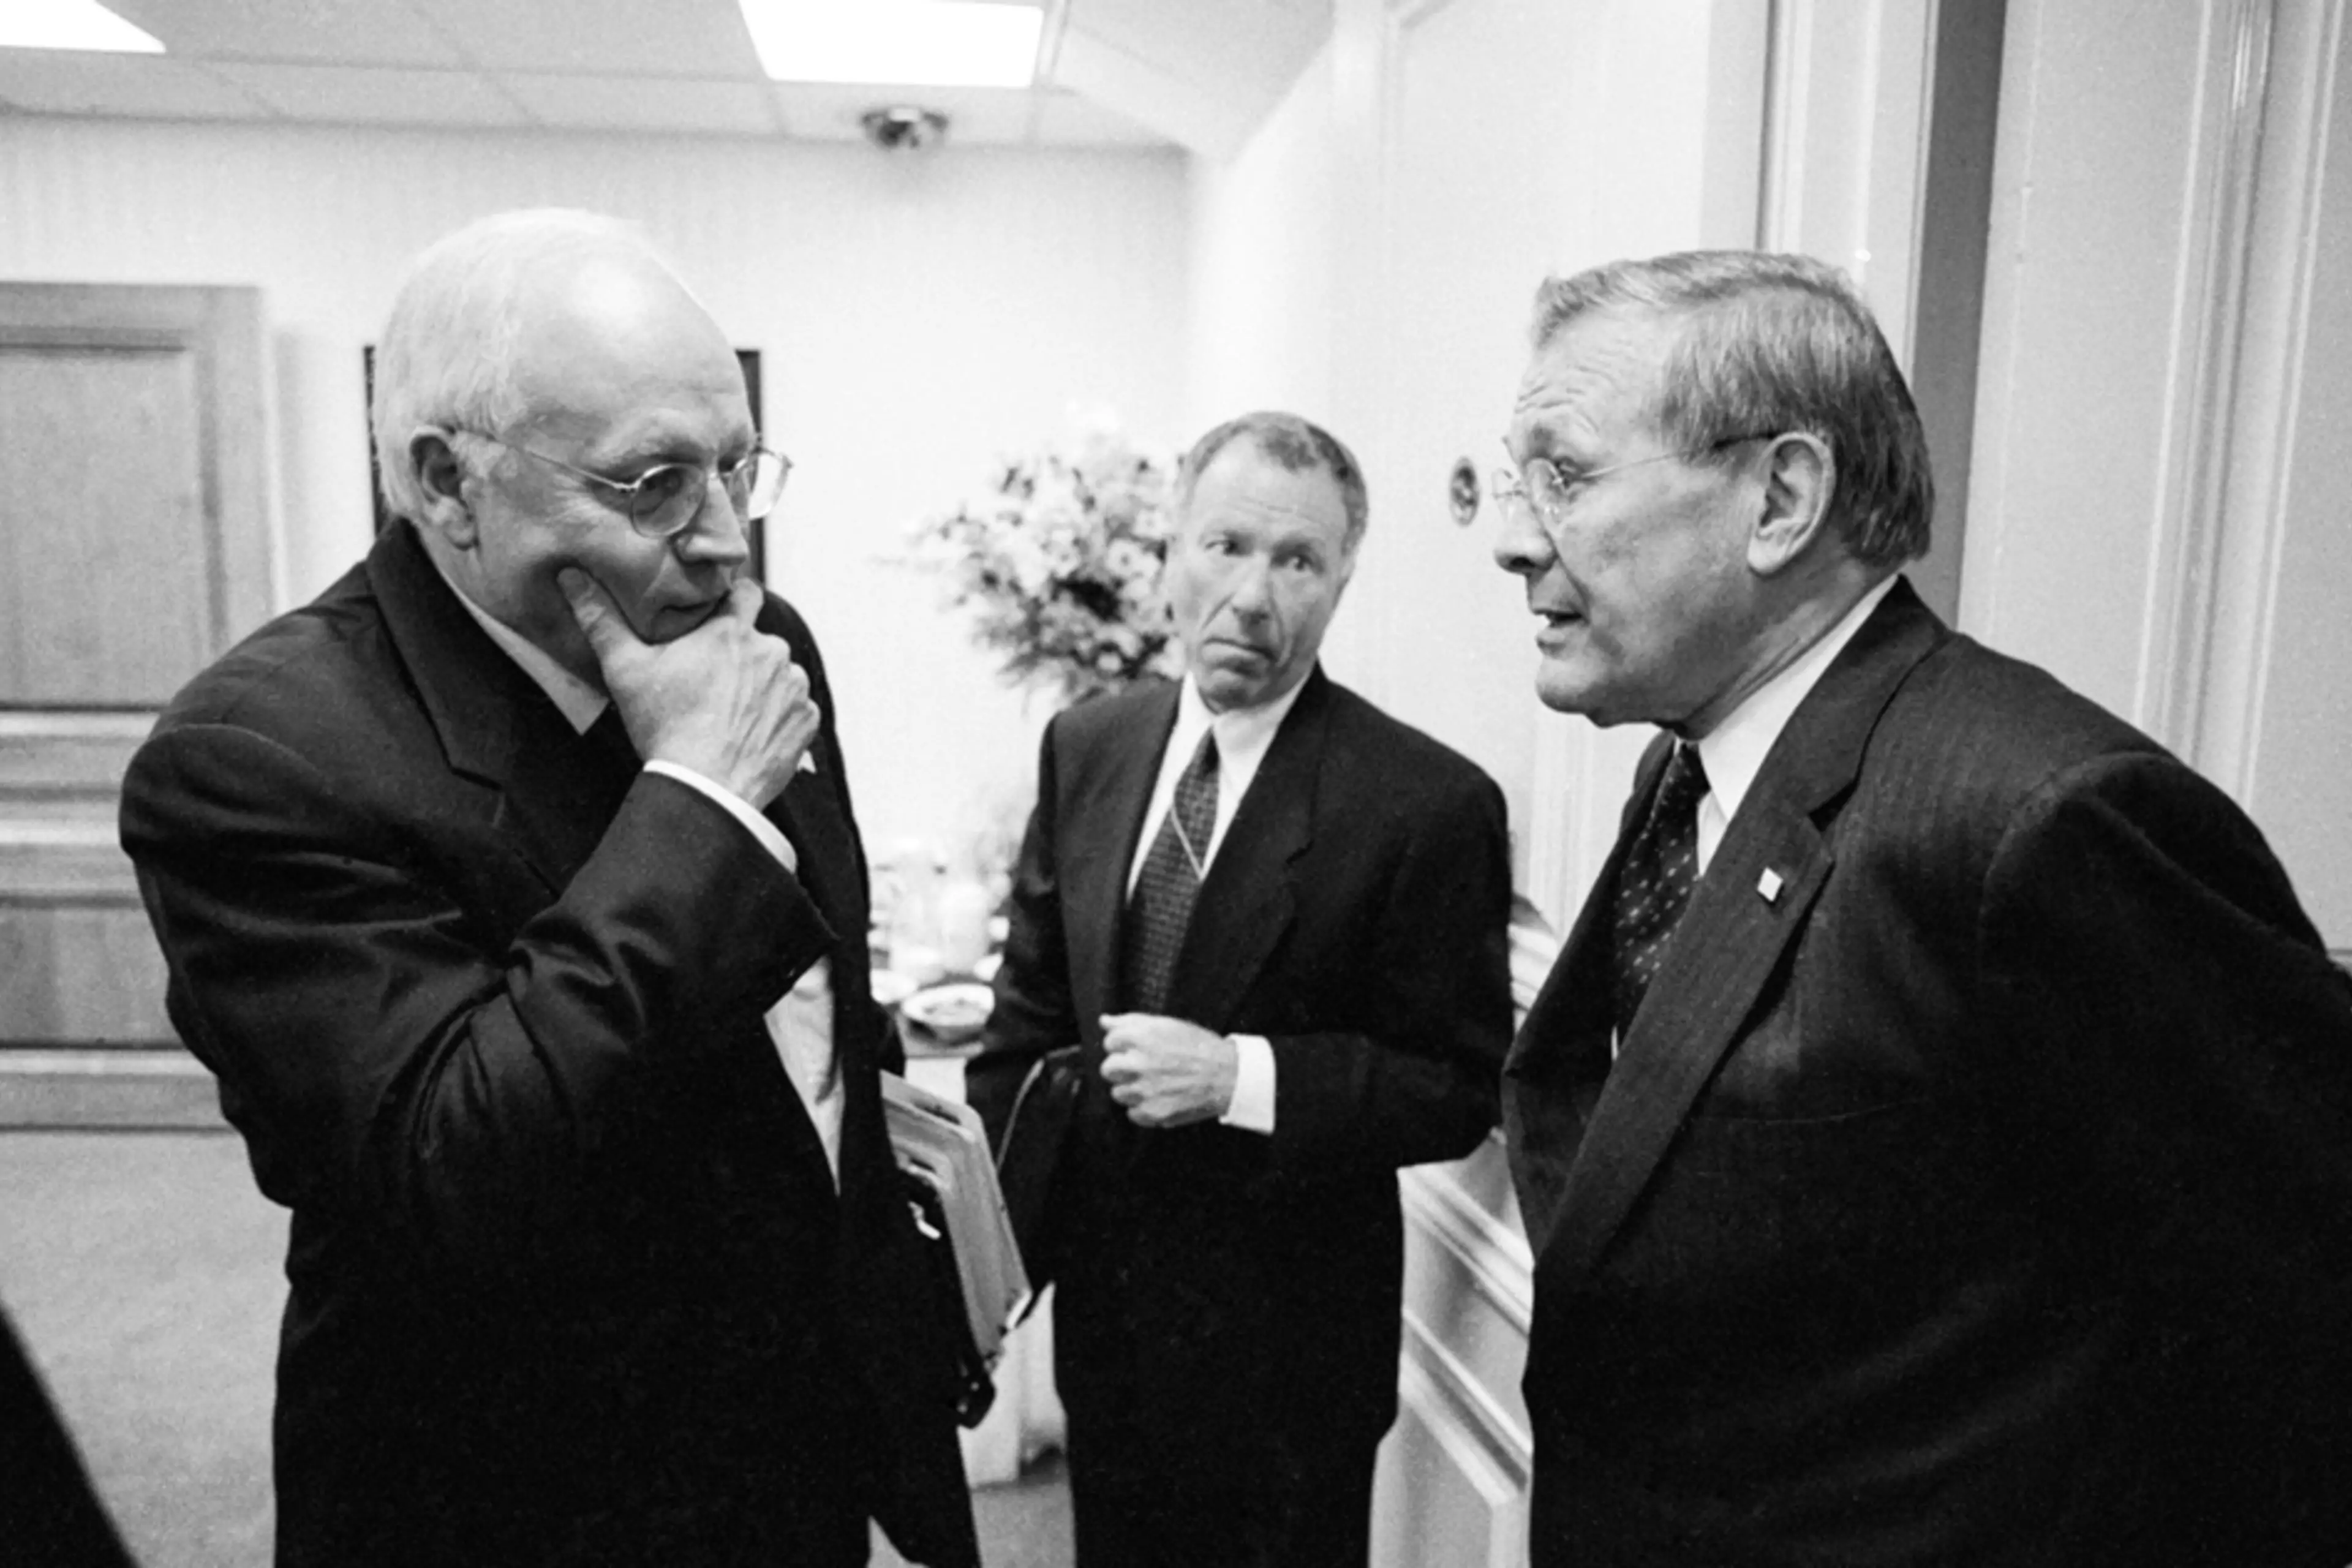 Vice President Dick Cheney and Defense Secretary Donald Rumsfeld talk at the Pentagon in 2002.